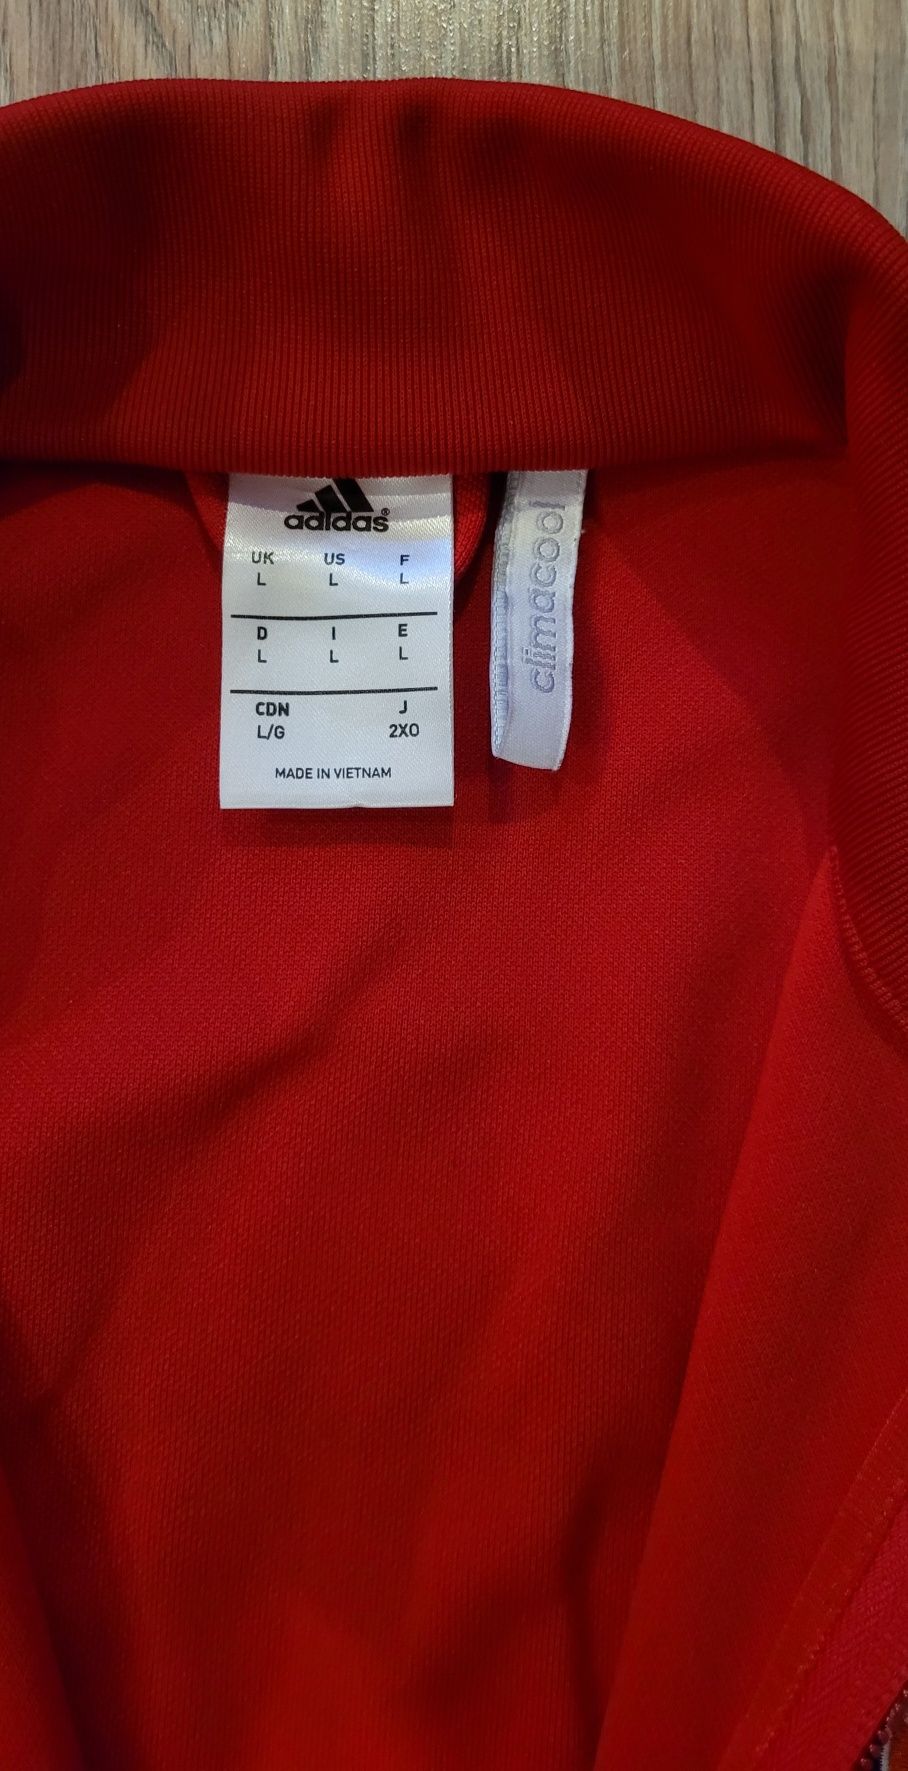 Okazja!Piękny dres Adidas Bayern Munchen